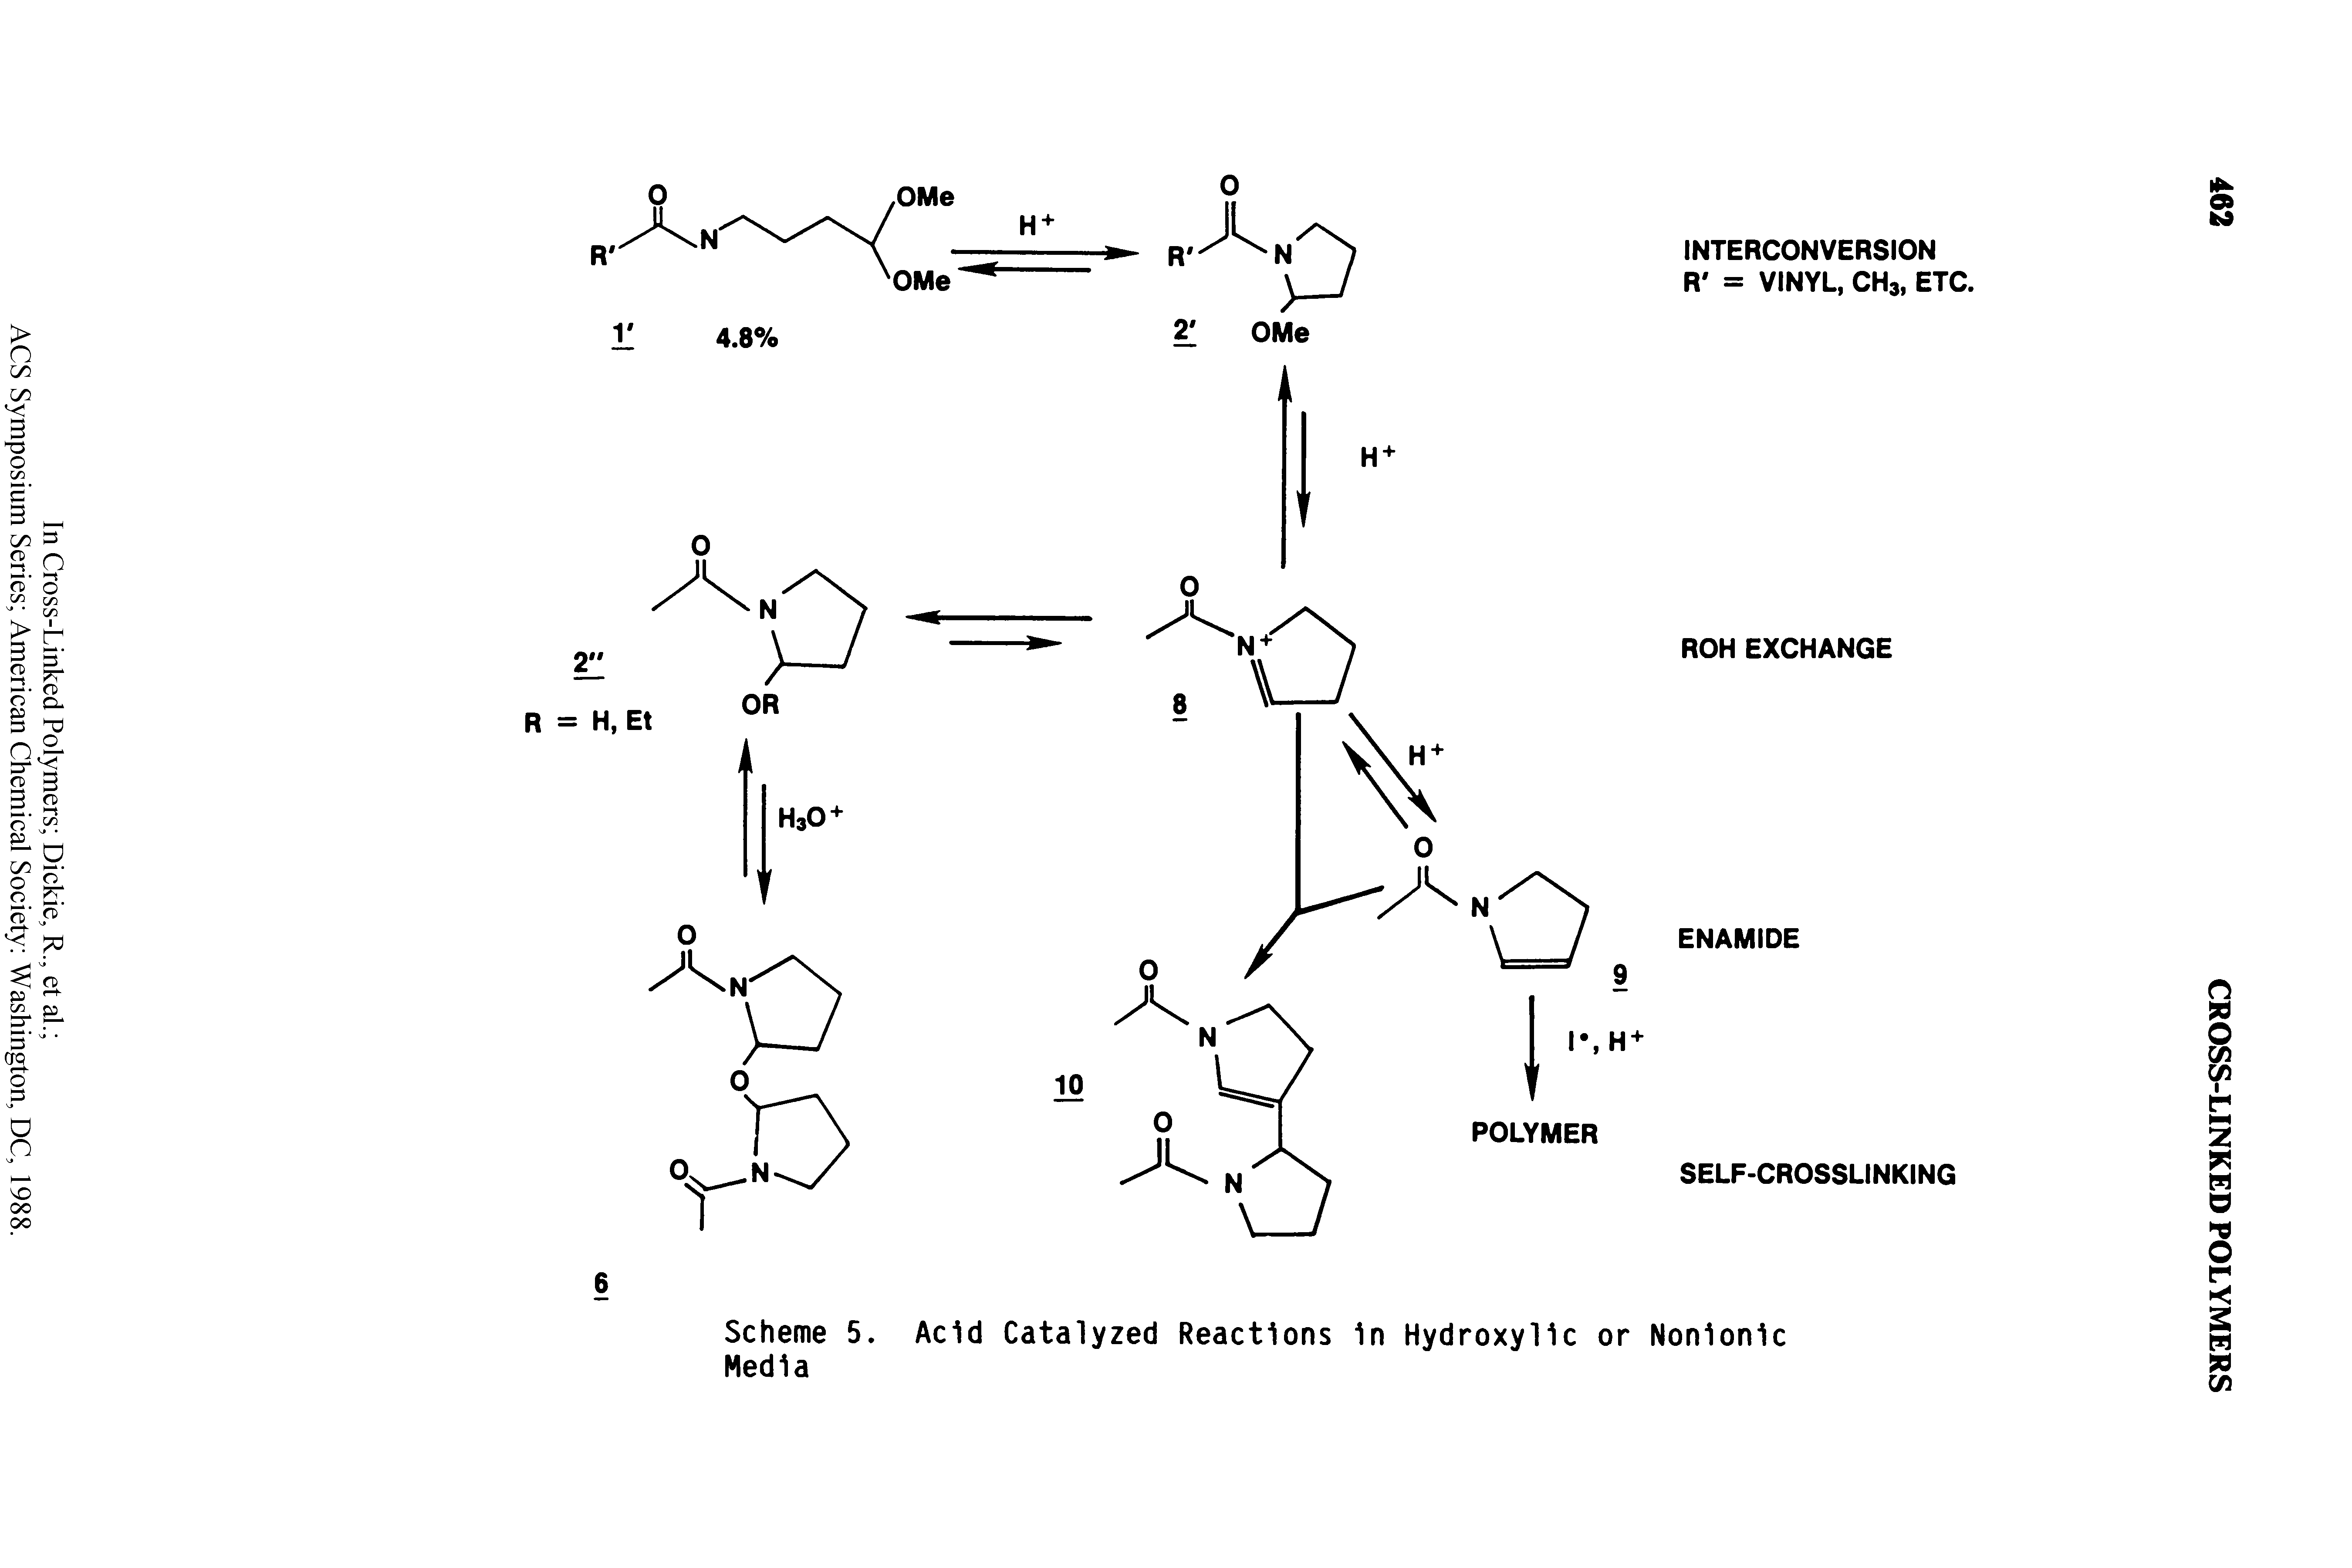 Scheme 5. Add Catalyzed Reactions 1n HydroxyHc or Non1on1c Media...